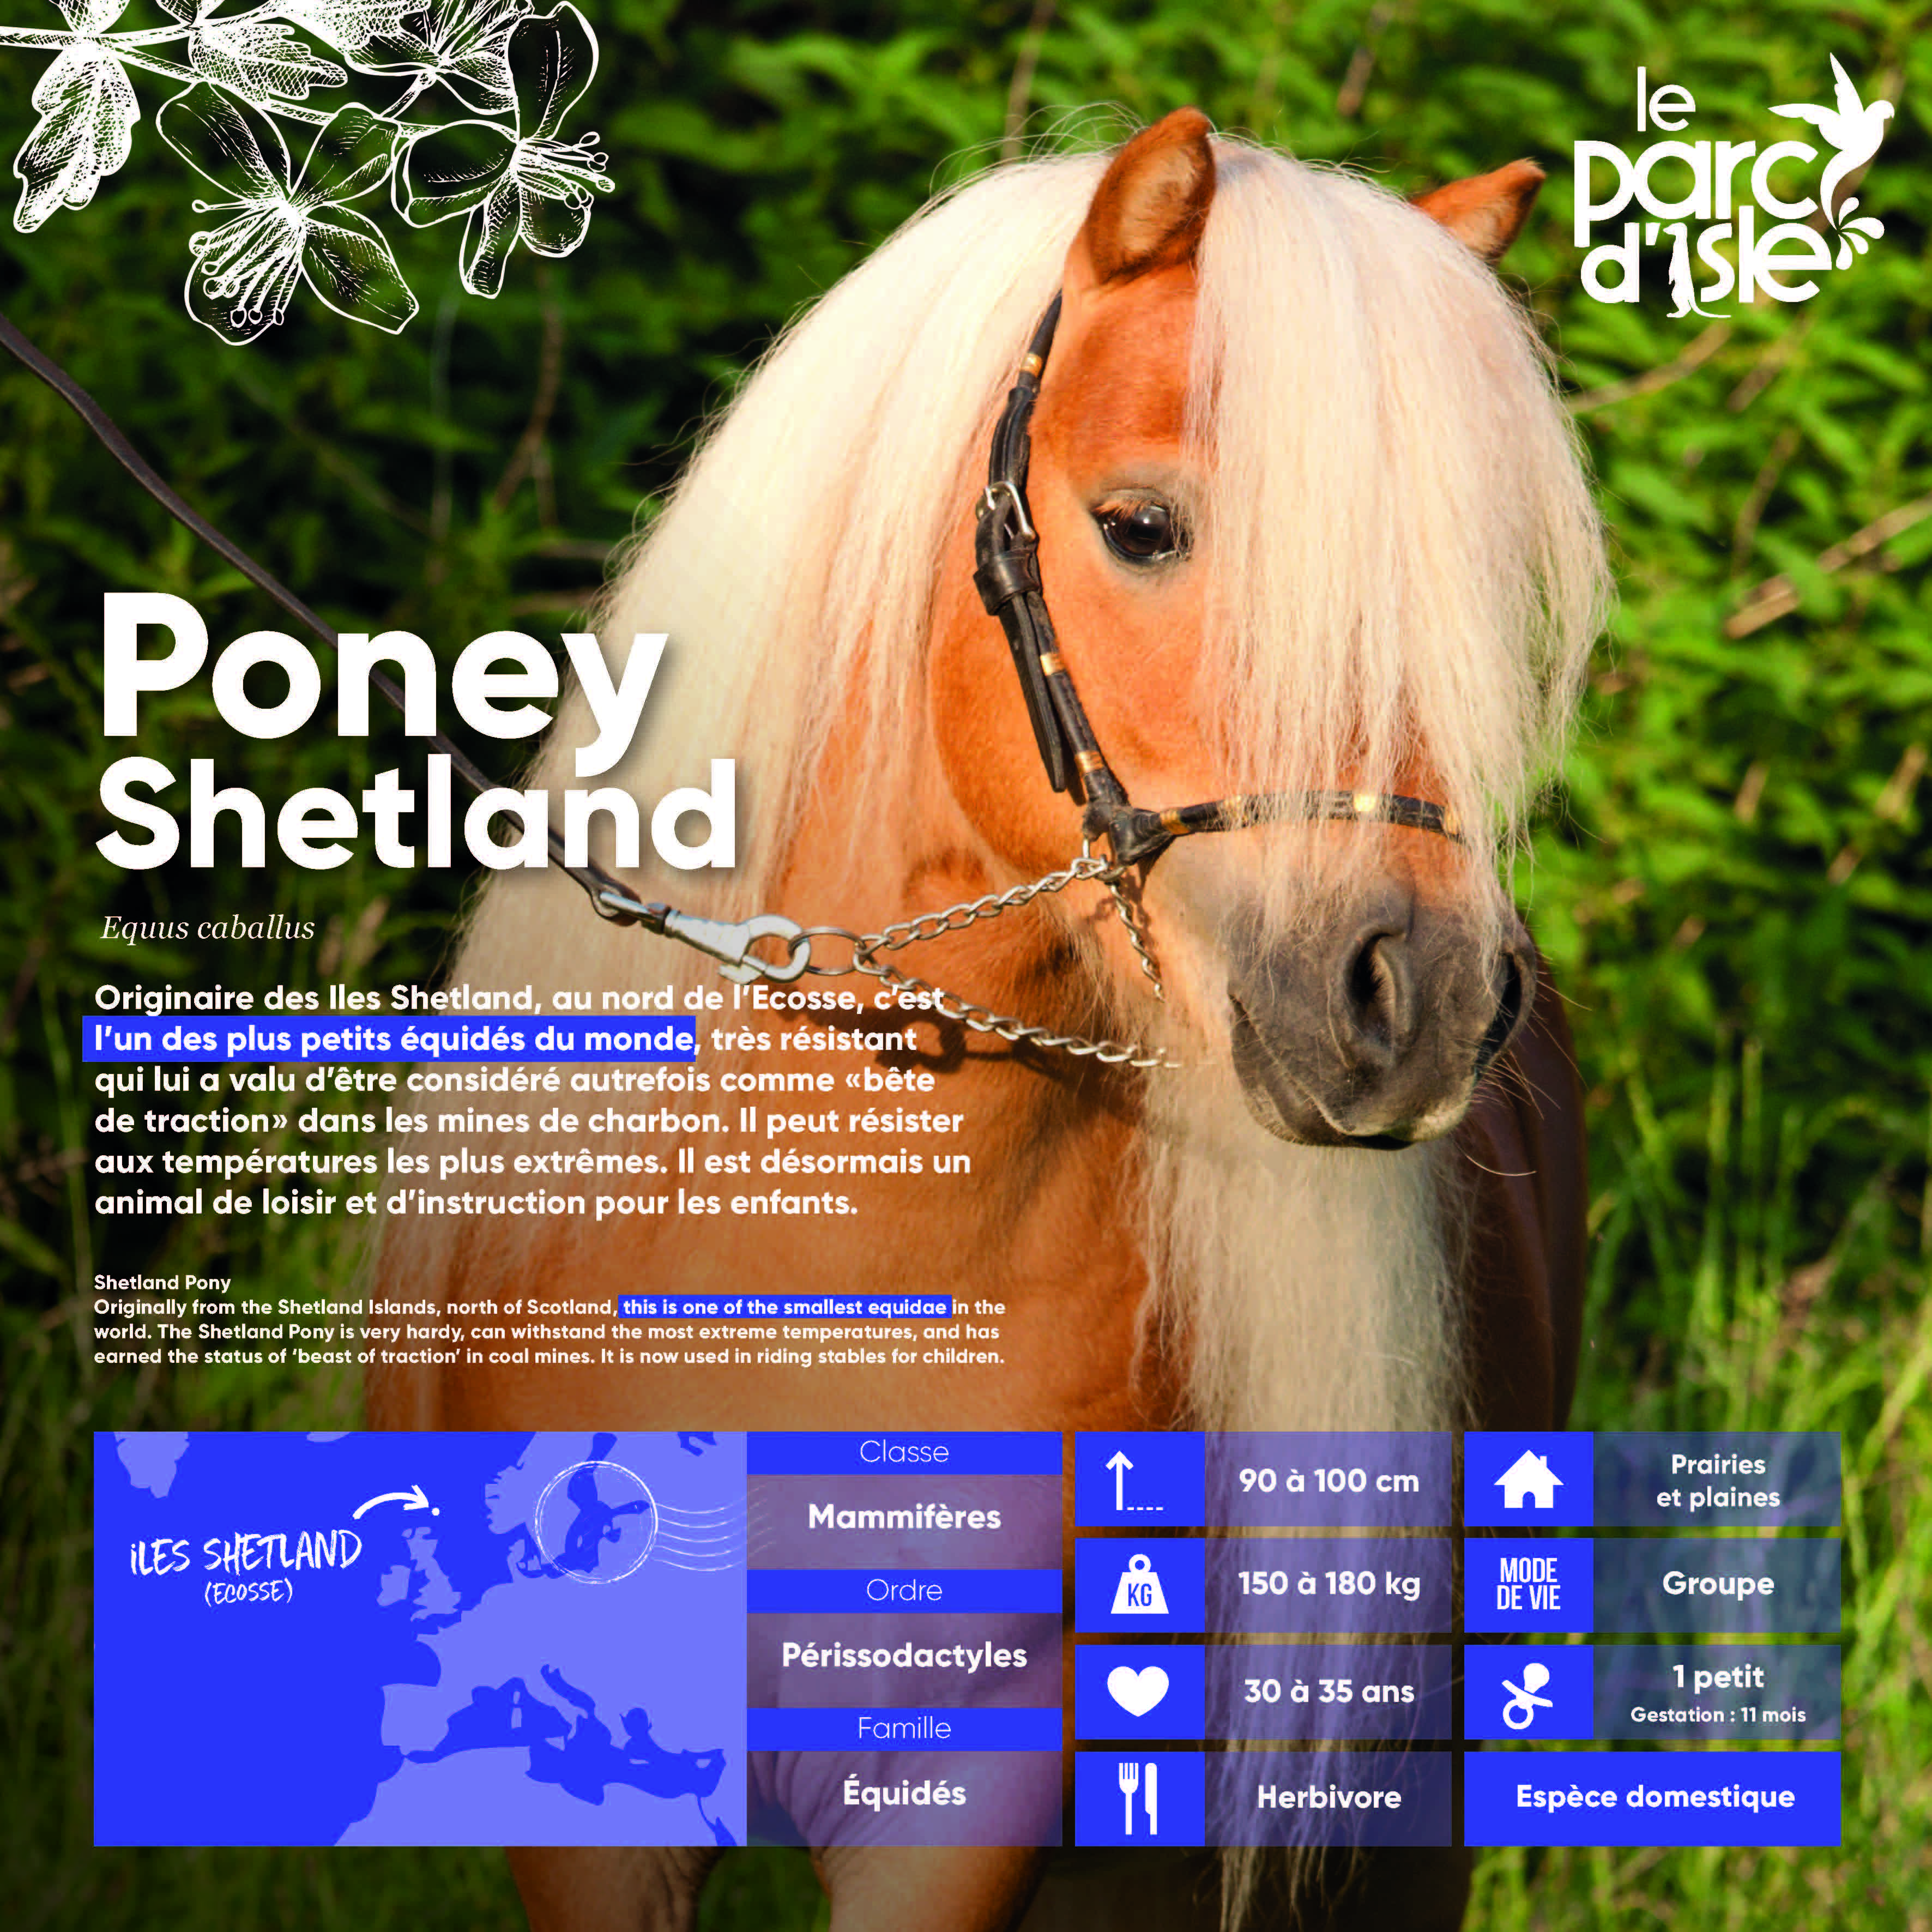 Poney Shetland - Agrandir l'image, .JPG 1,07Mo (fenêtre modale)